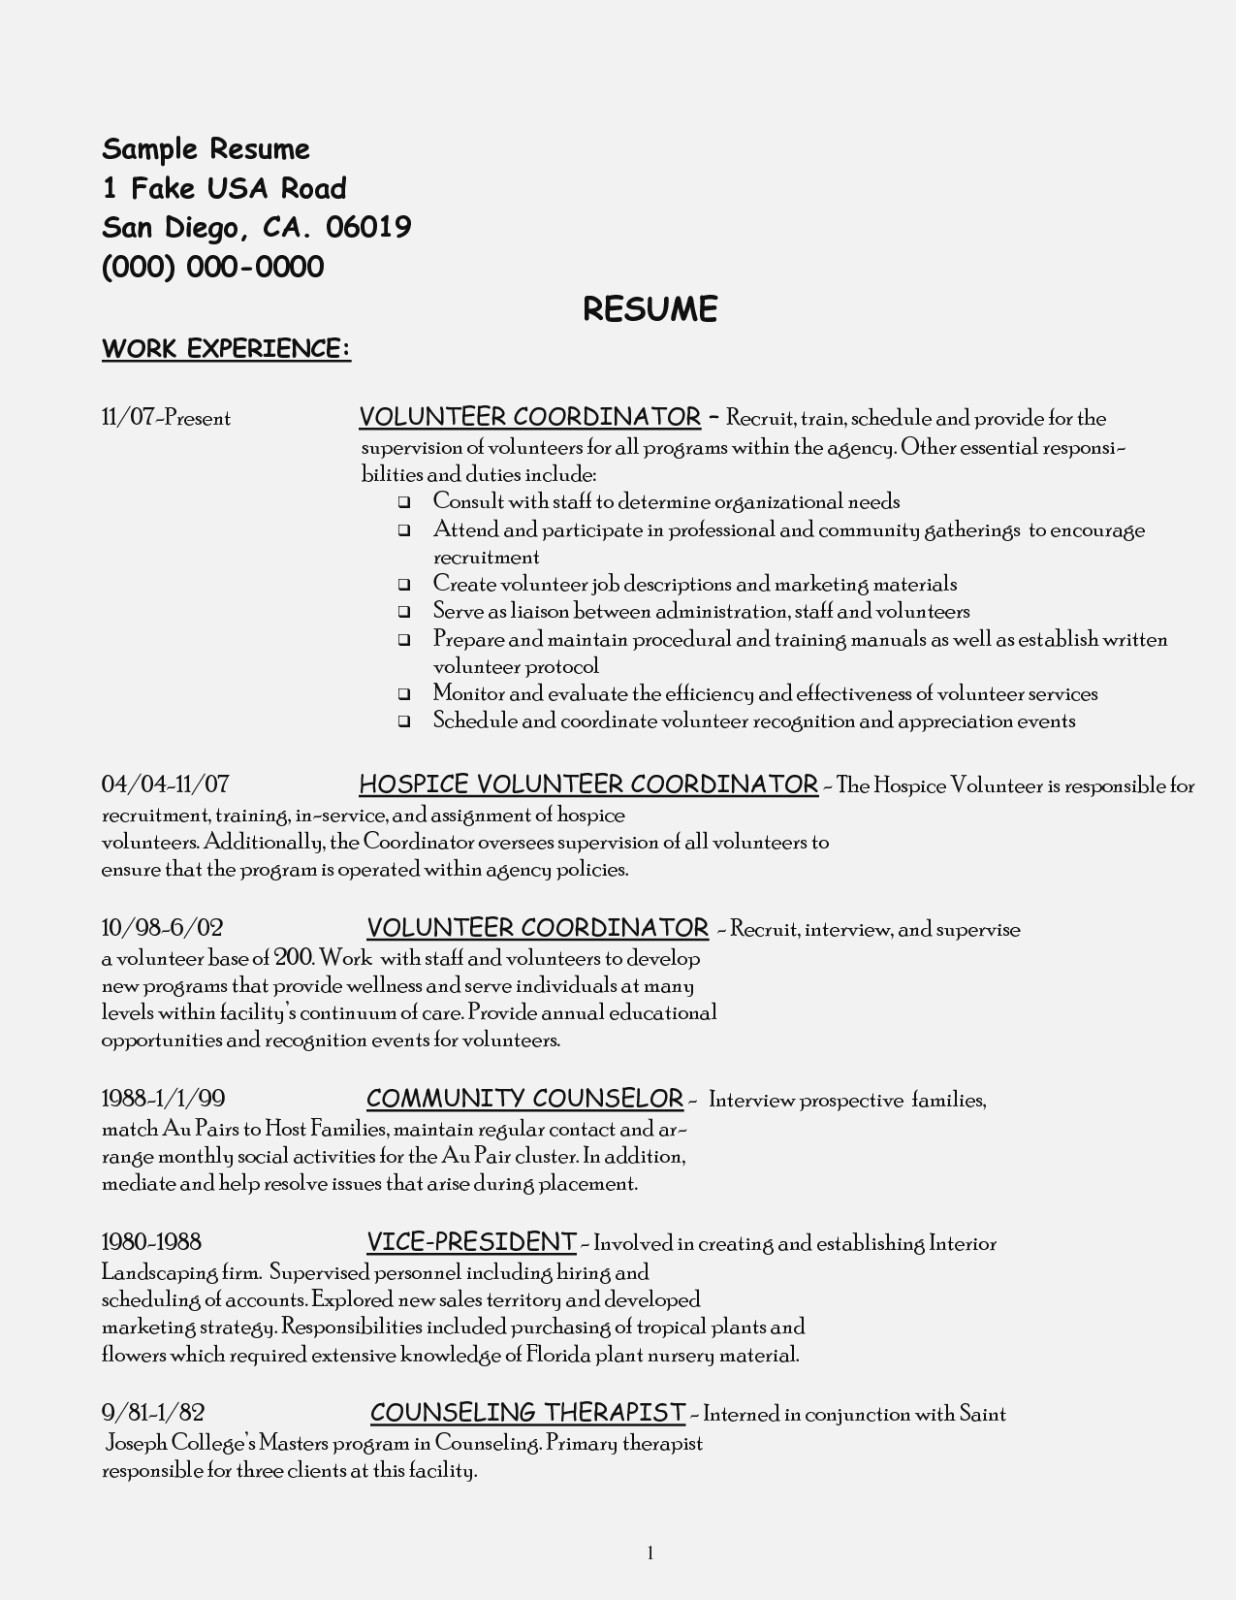 Sample Resume with Volunteer Work Included Resume Volunteer Work Sample – Good Resume Examples